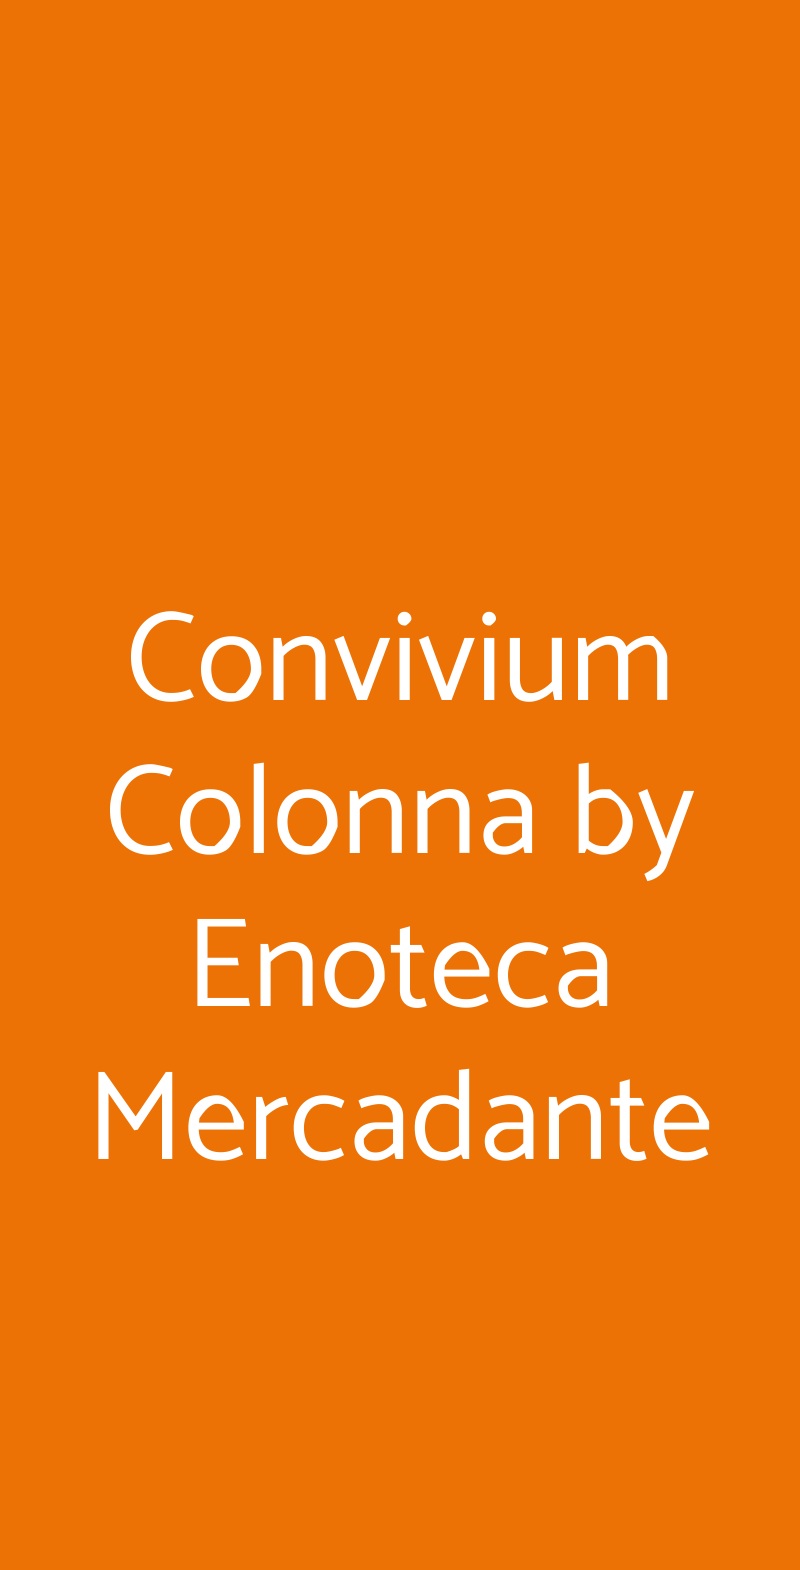 Convivium Colonna by Enoteca Mercadante Napoli menù 1 pagina